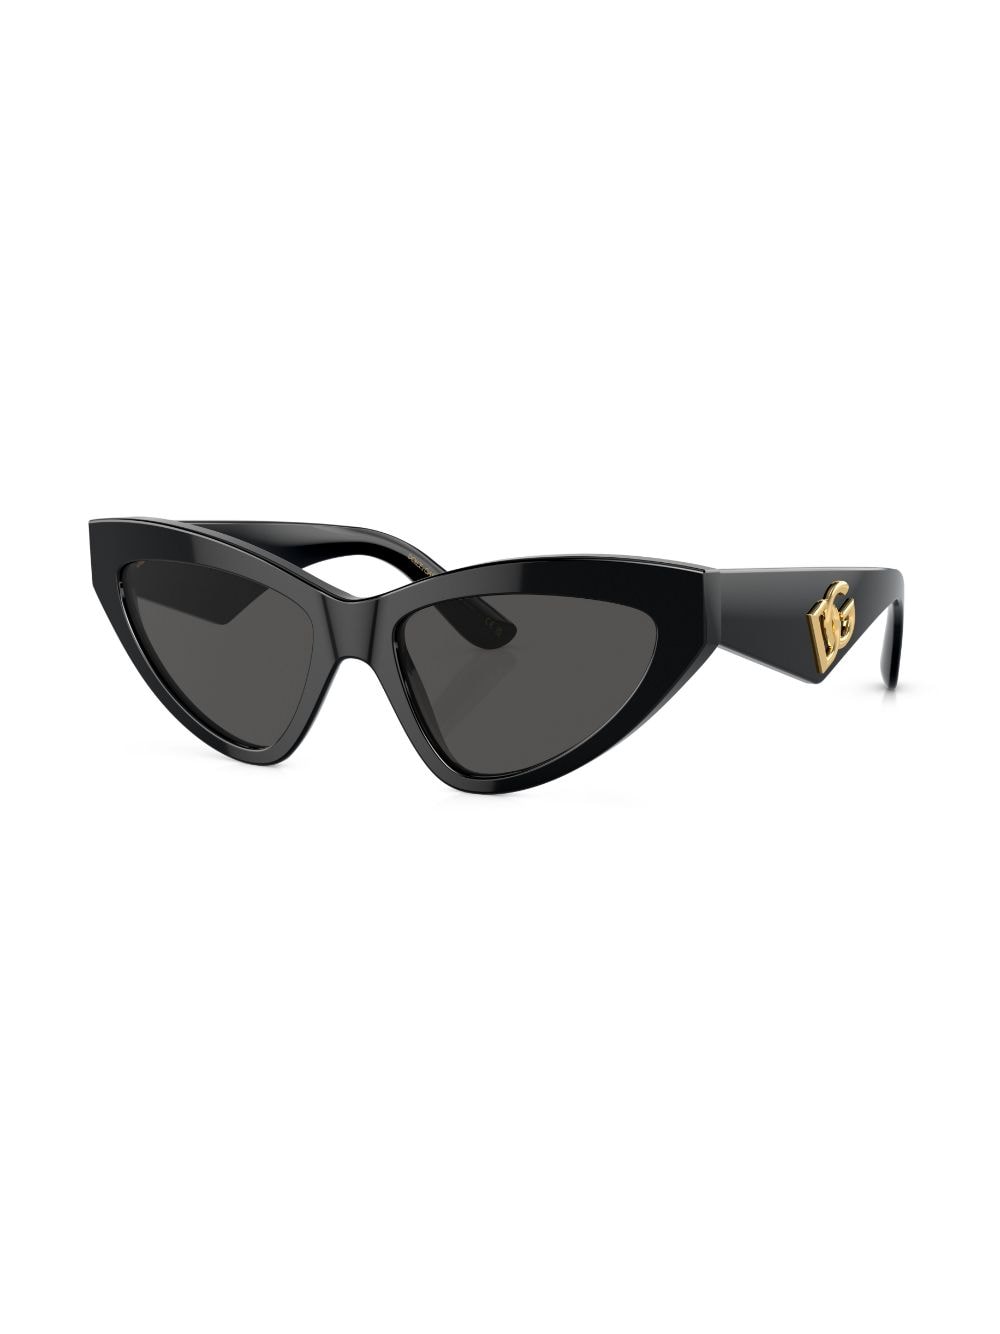 Dolce & Gabbana Eyewear Zonnebril met cat-eye montuur - Zwart